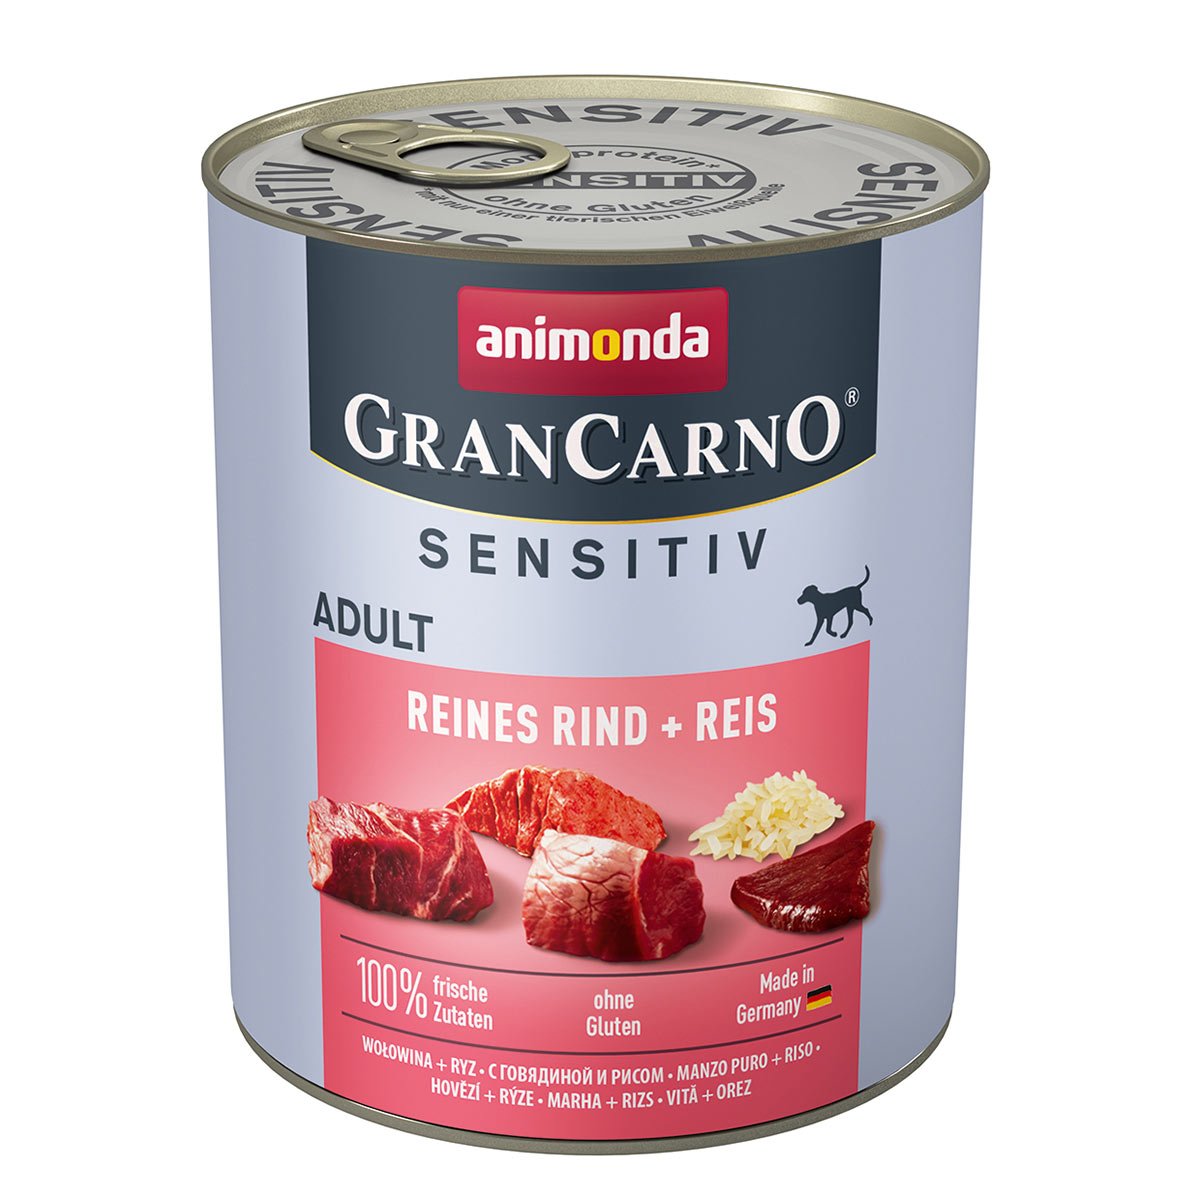 animonda GranCarno Adult Sensitiv Reines Rind + Reis 6x800g